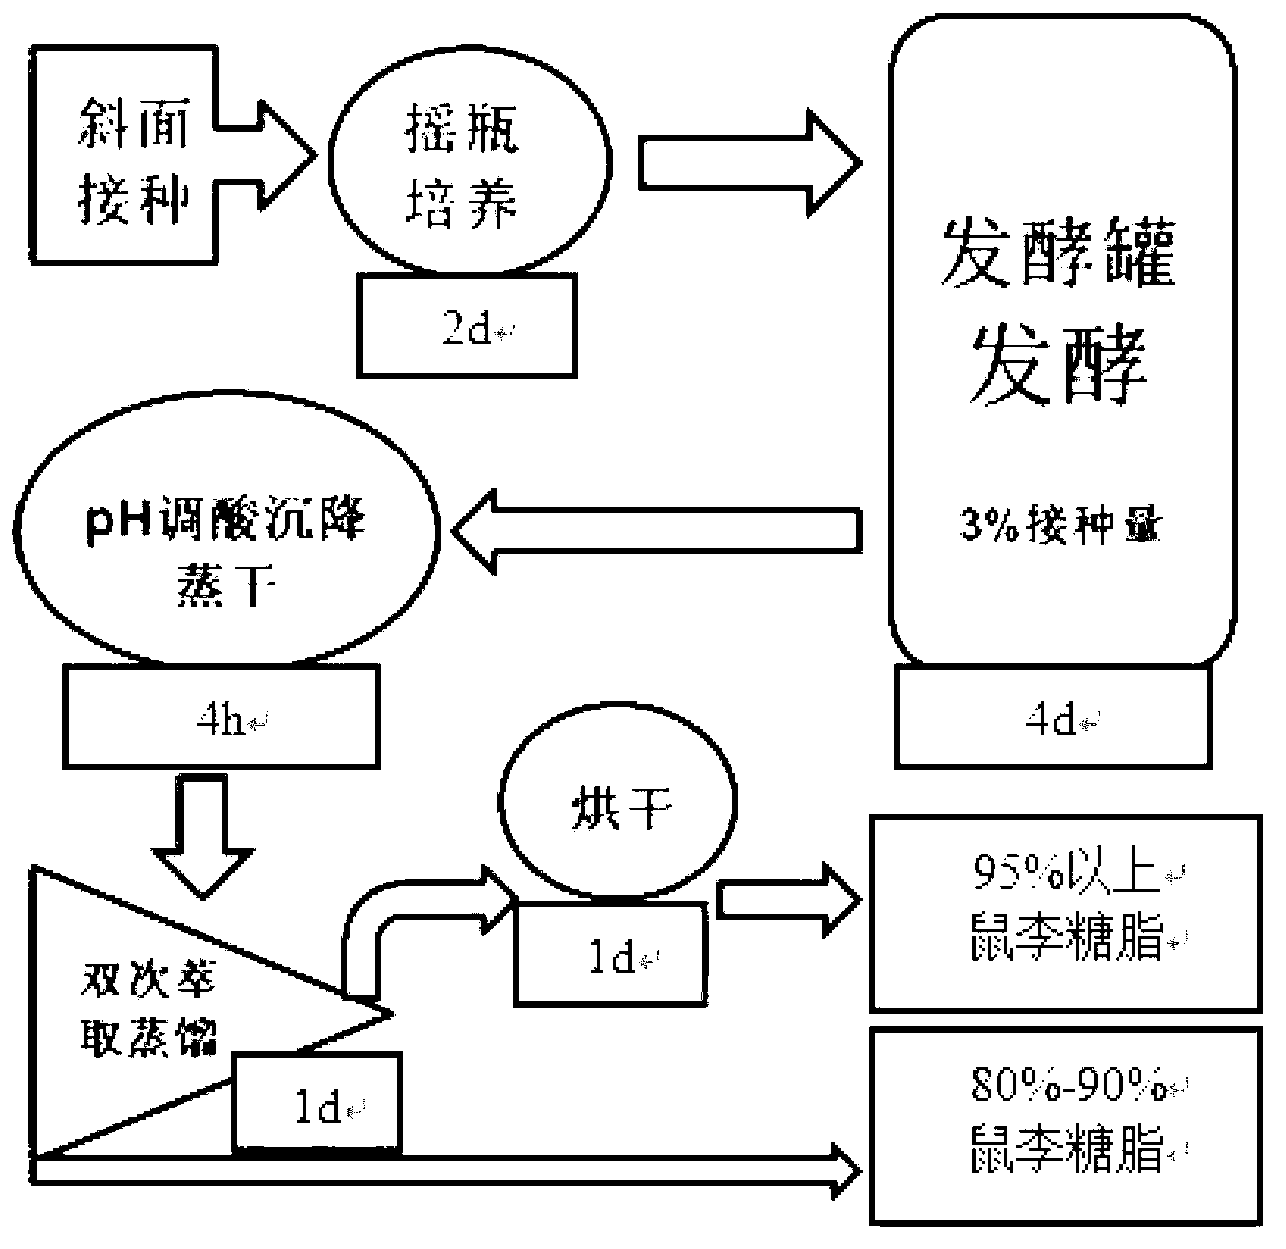 Method for producing rhamnolipid by virtue of fermentation and separation of pseudomonas aeruginosa